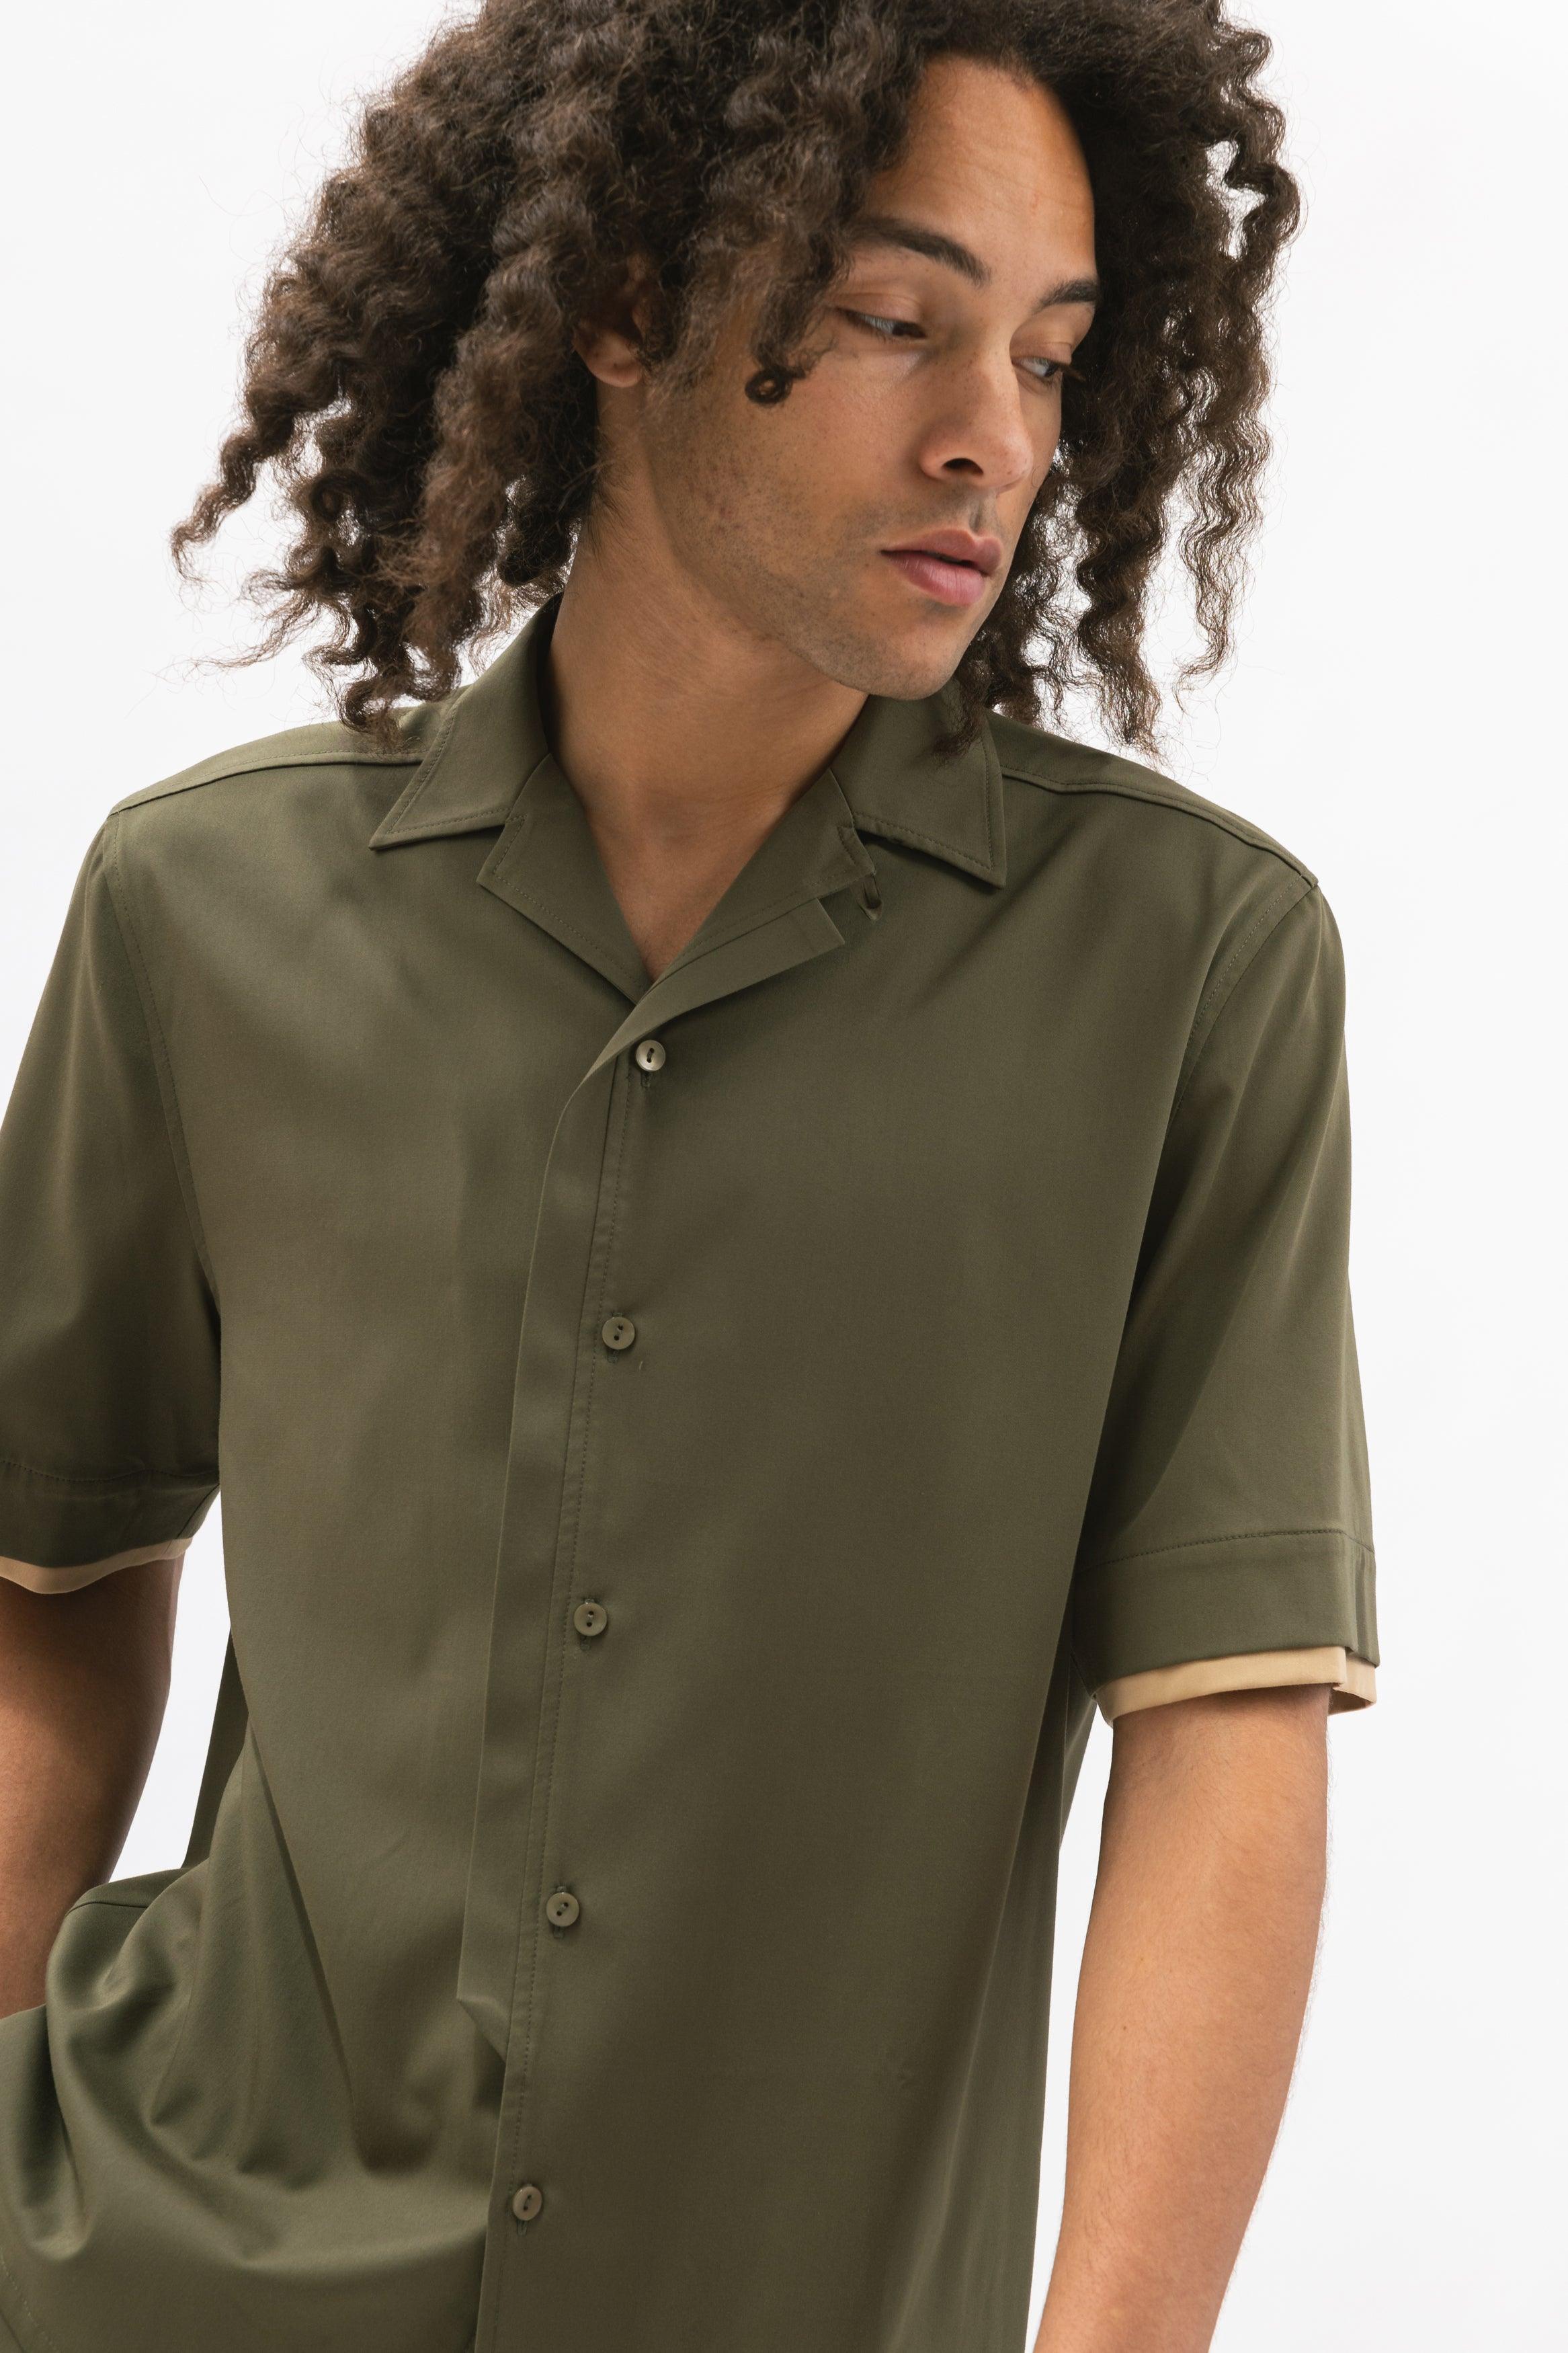 Men's Short Sleeve Safari Shirts, Mens Shirts